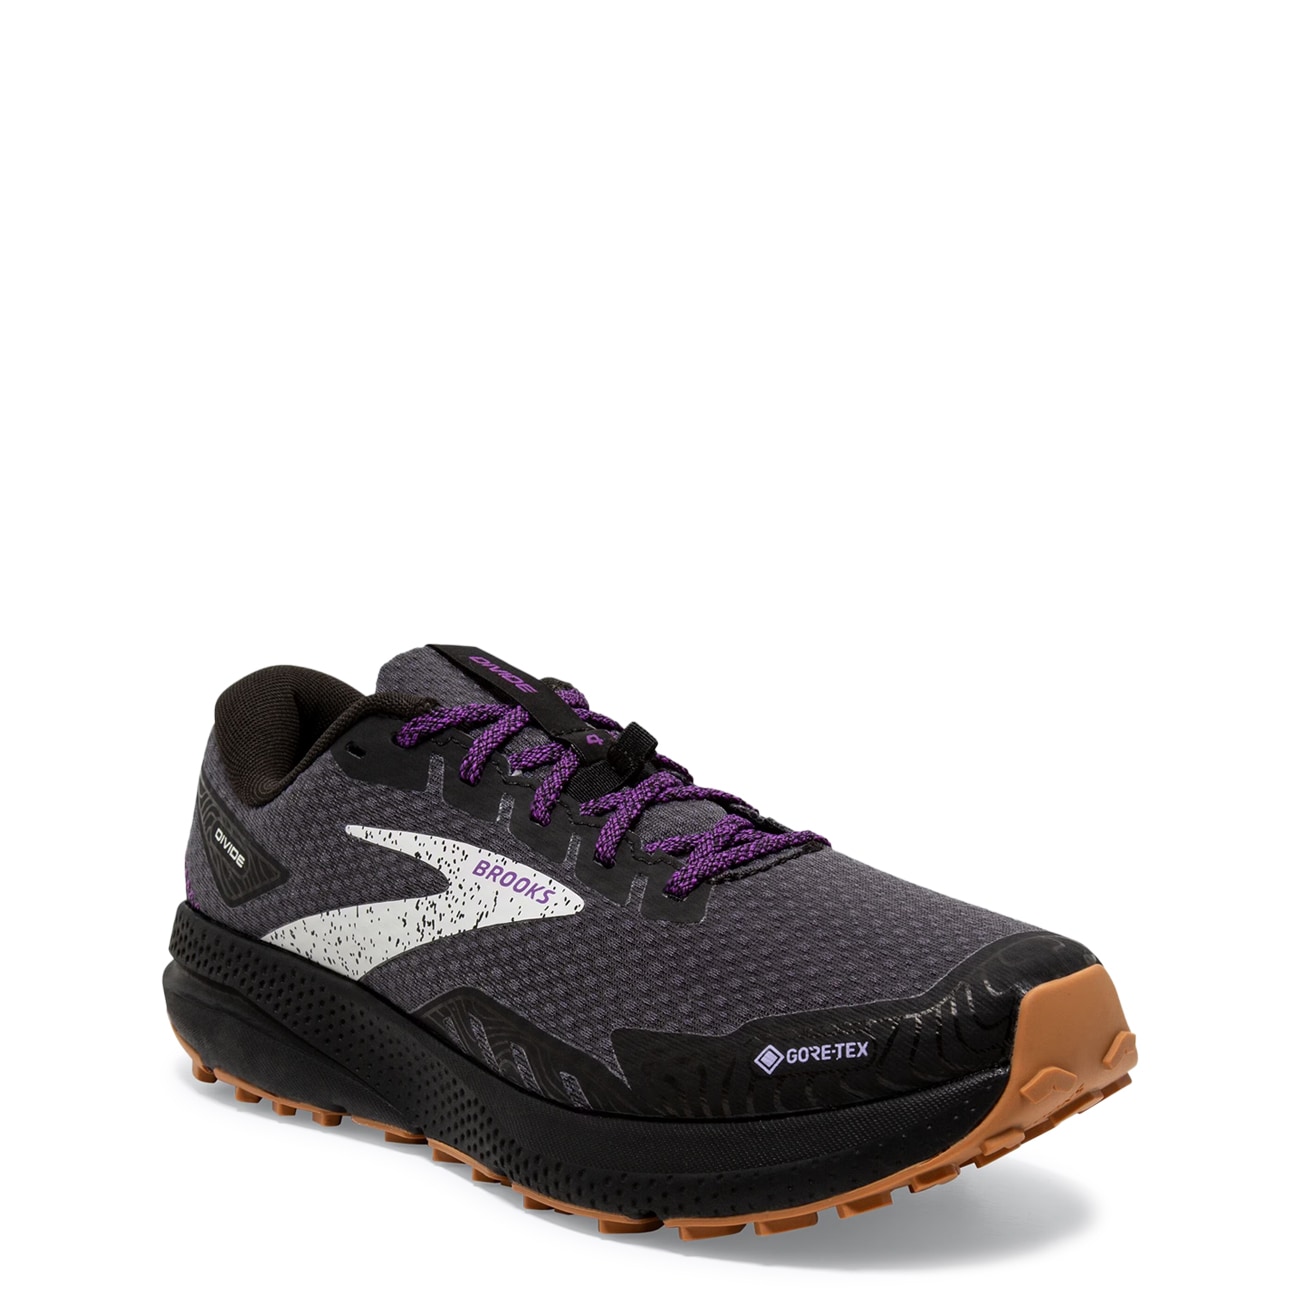 Women's Divide 4 GTX Waterproof Trail Running Shoe